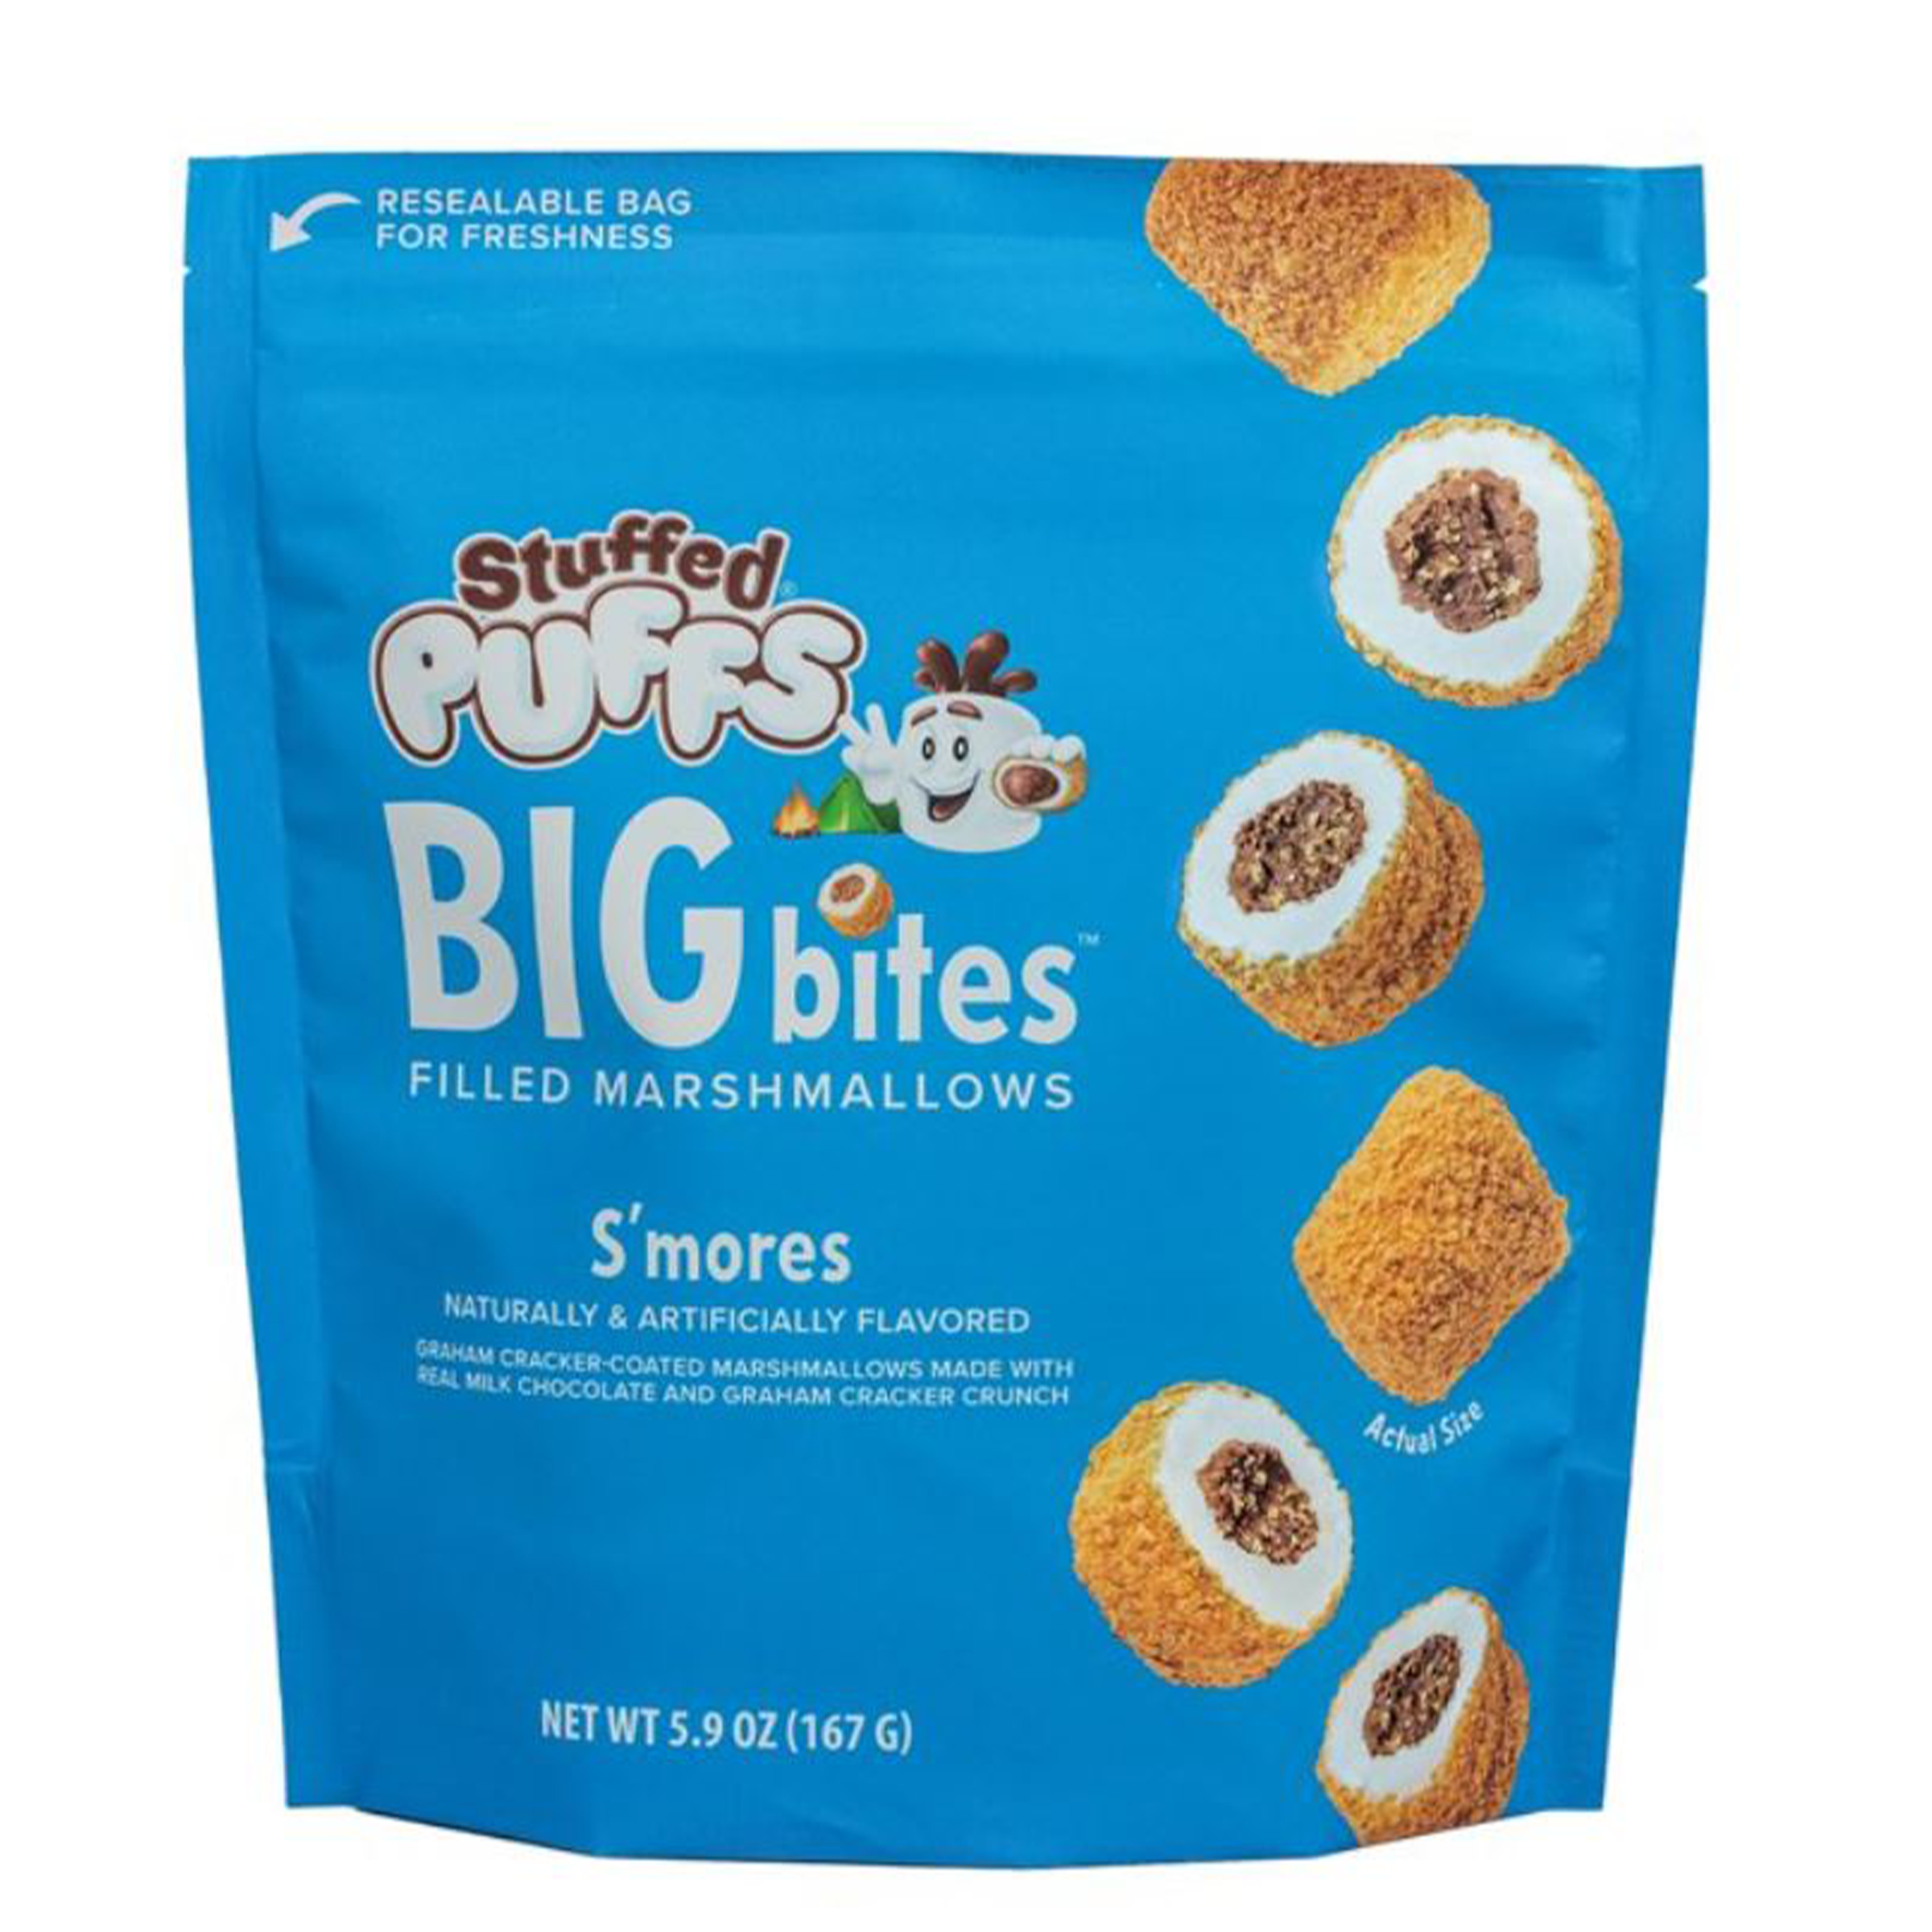 Stuffed Puffs Big Bites - Smores Filled Marshmallows